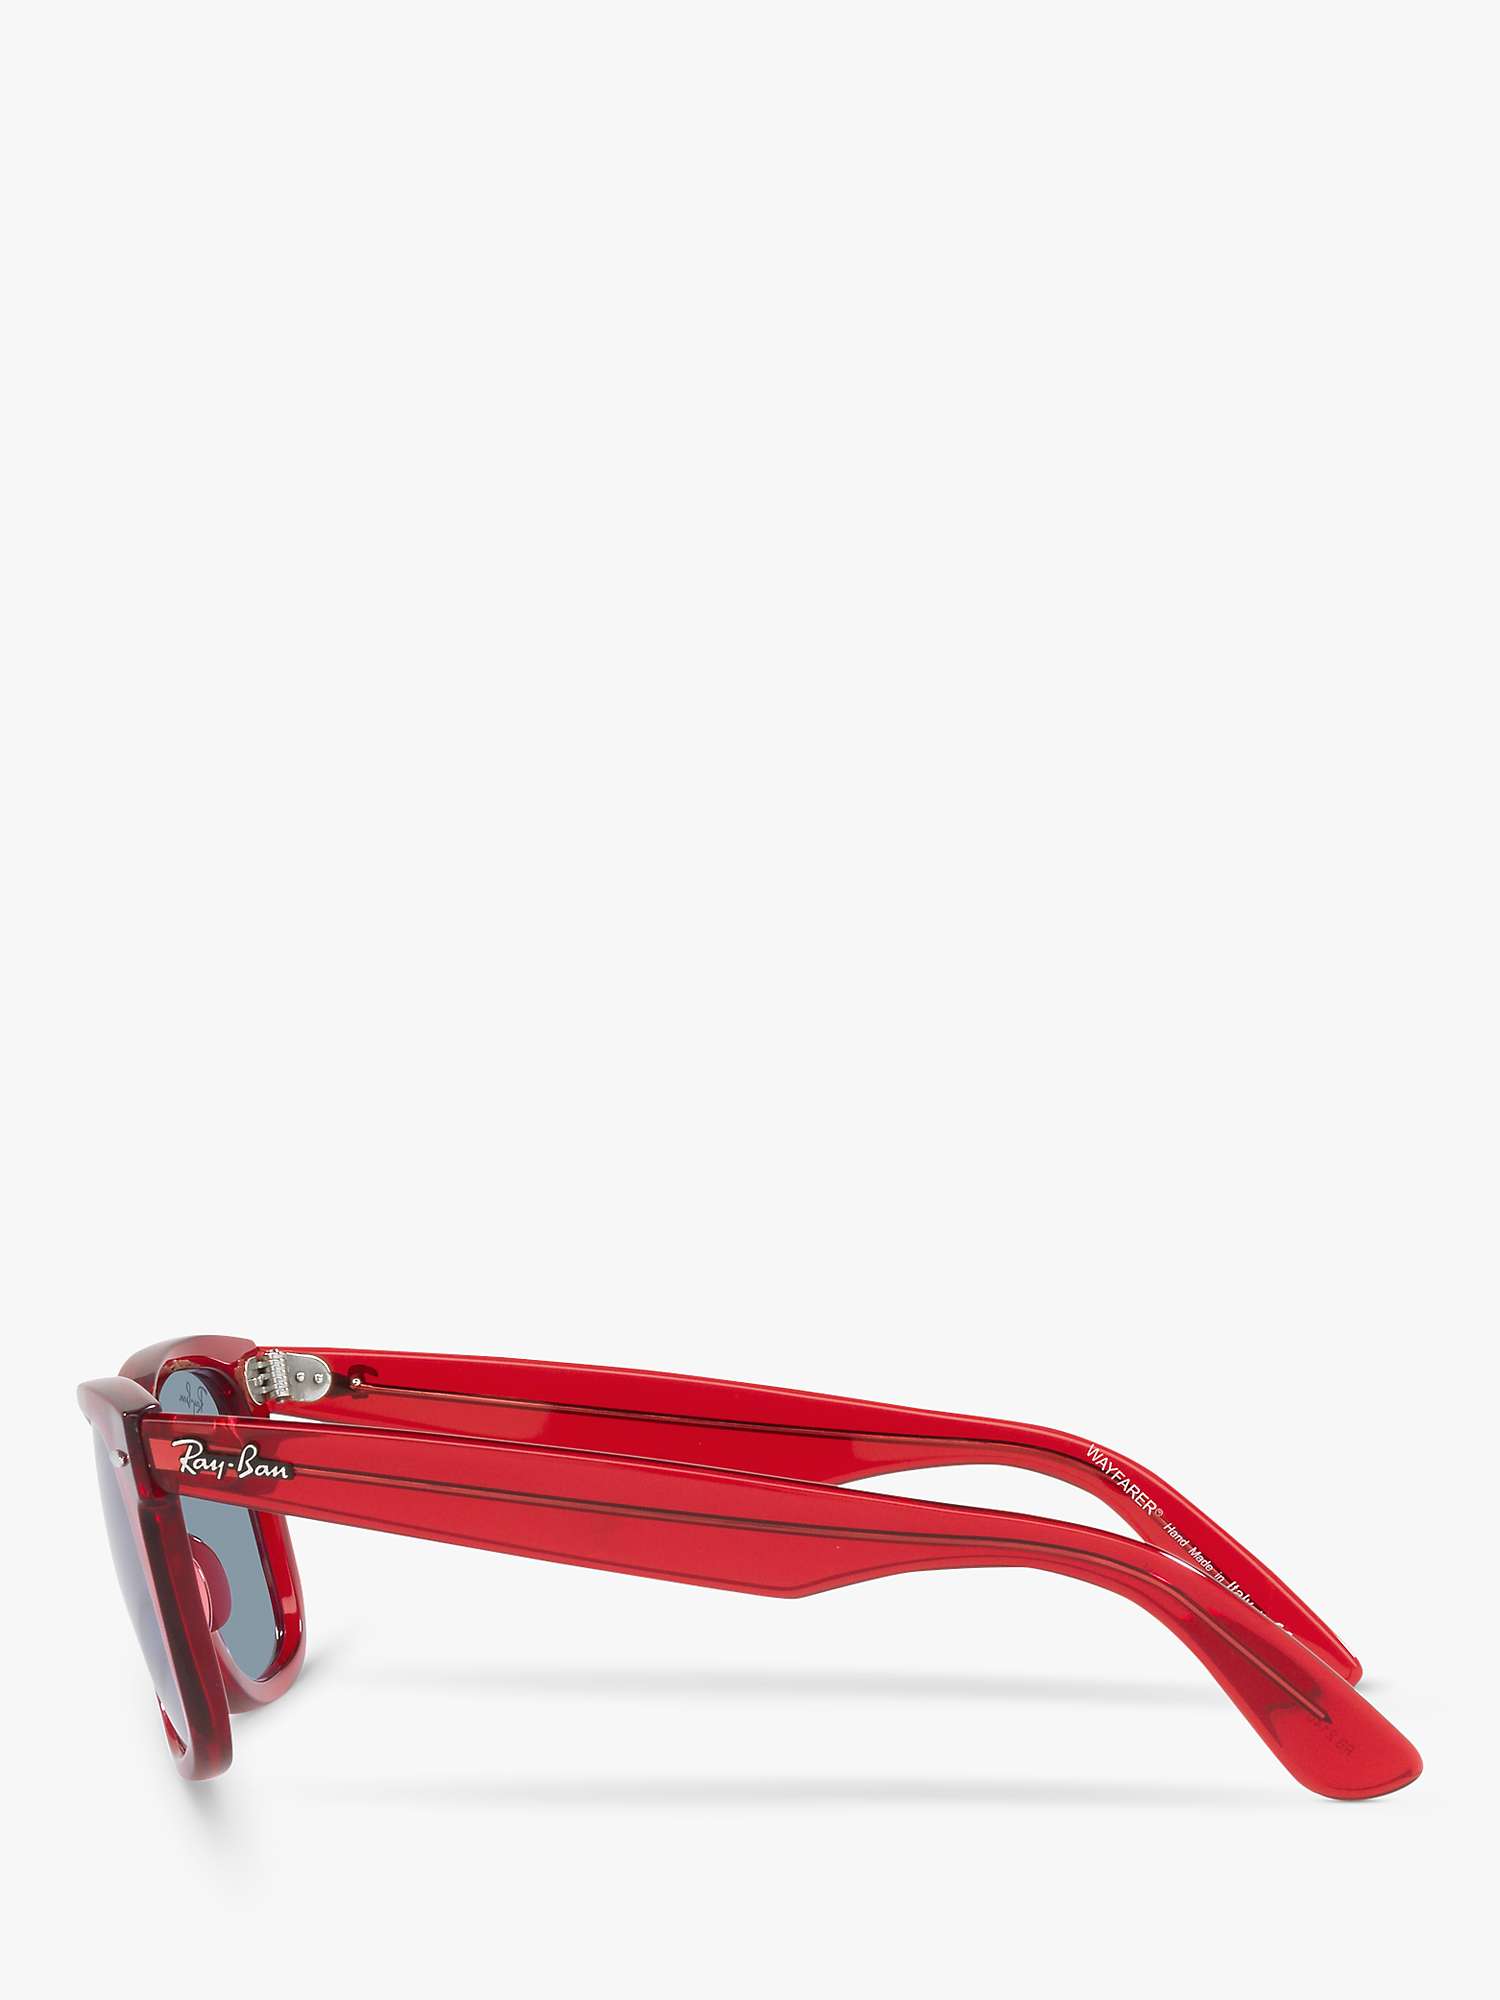 Buy Ray-Ban RB2140 Unisex Original Wayfarer Sunglasses Online at johnlewis.com